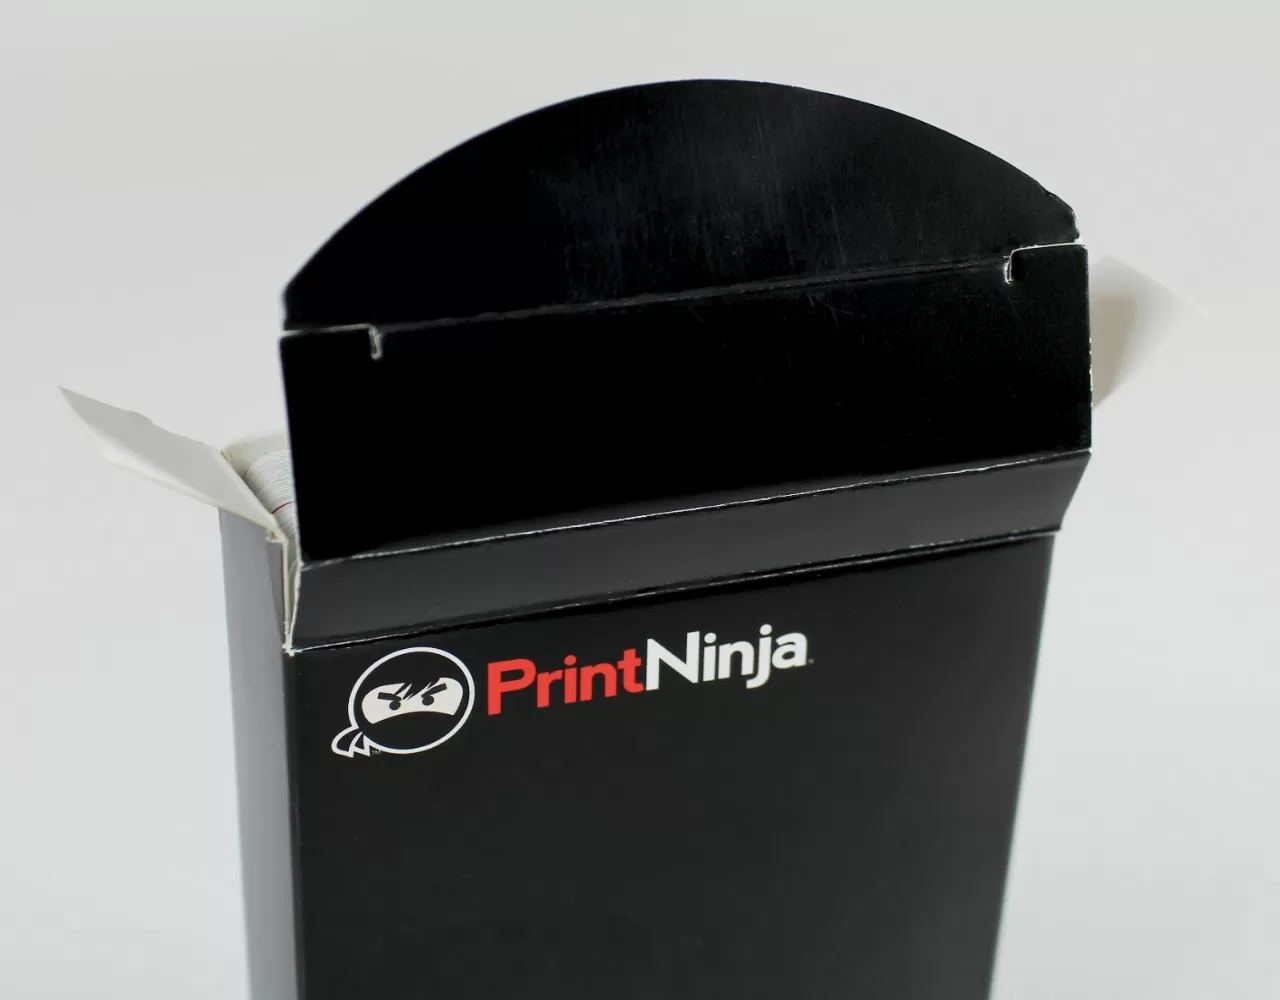 PrintNinja's signature tuck box for your custom card game.